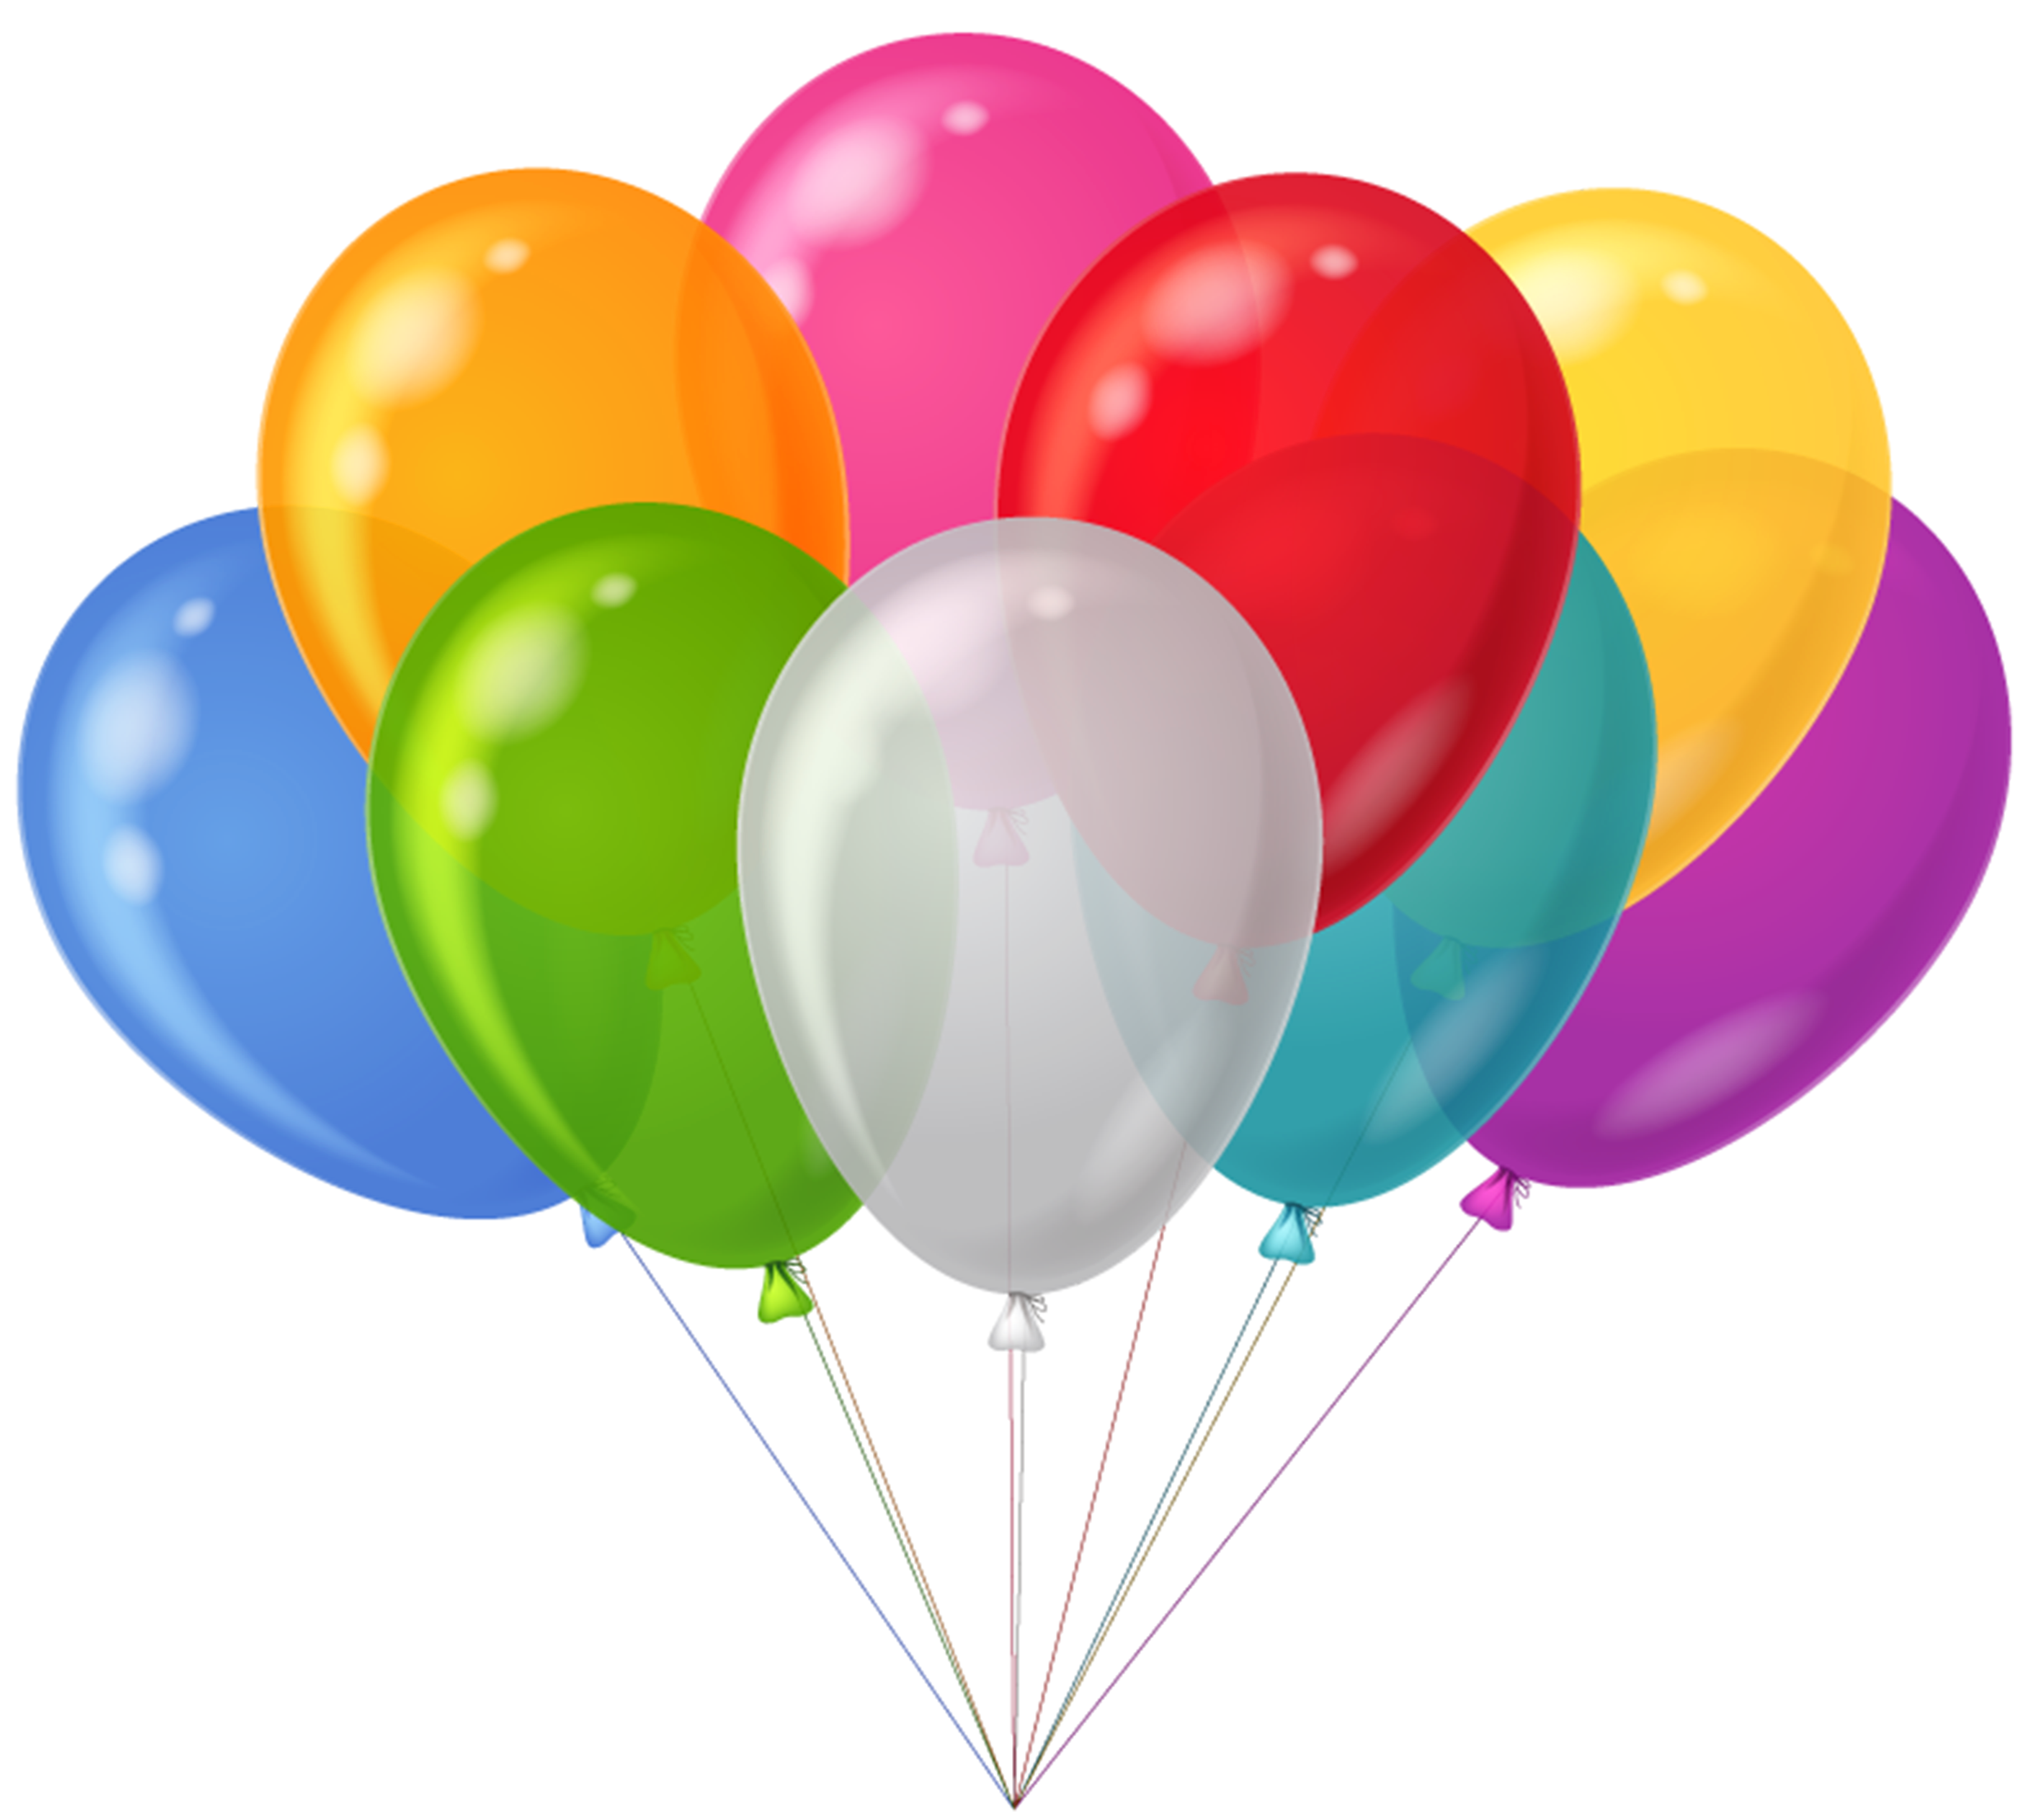 Ballon clipart. Bunch transparent colorful balloons